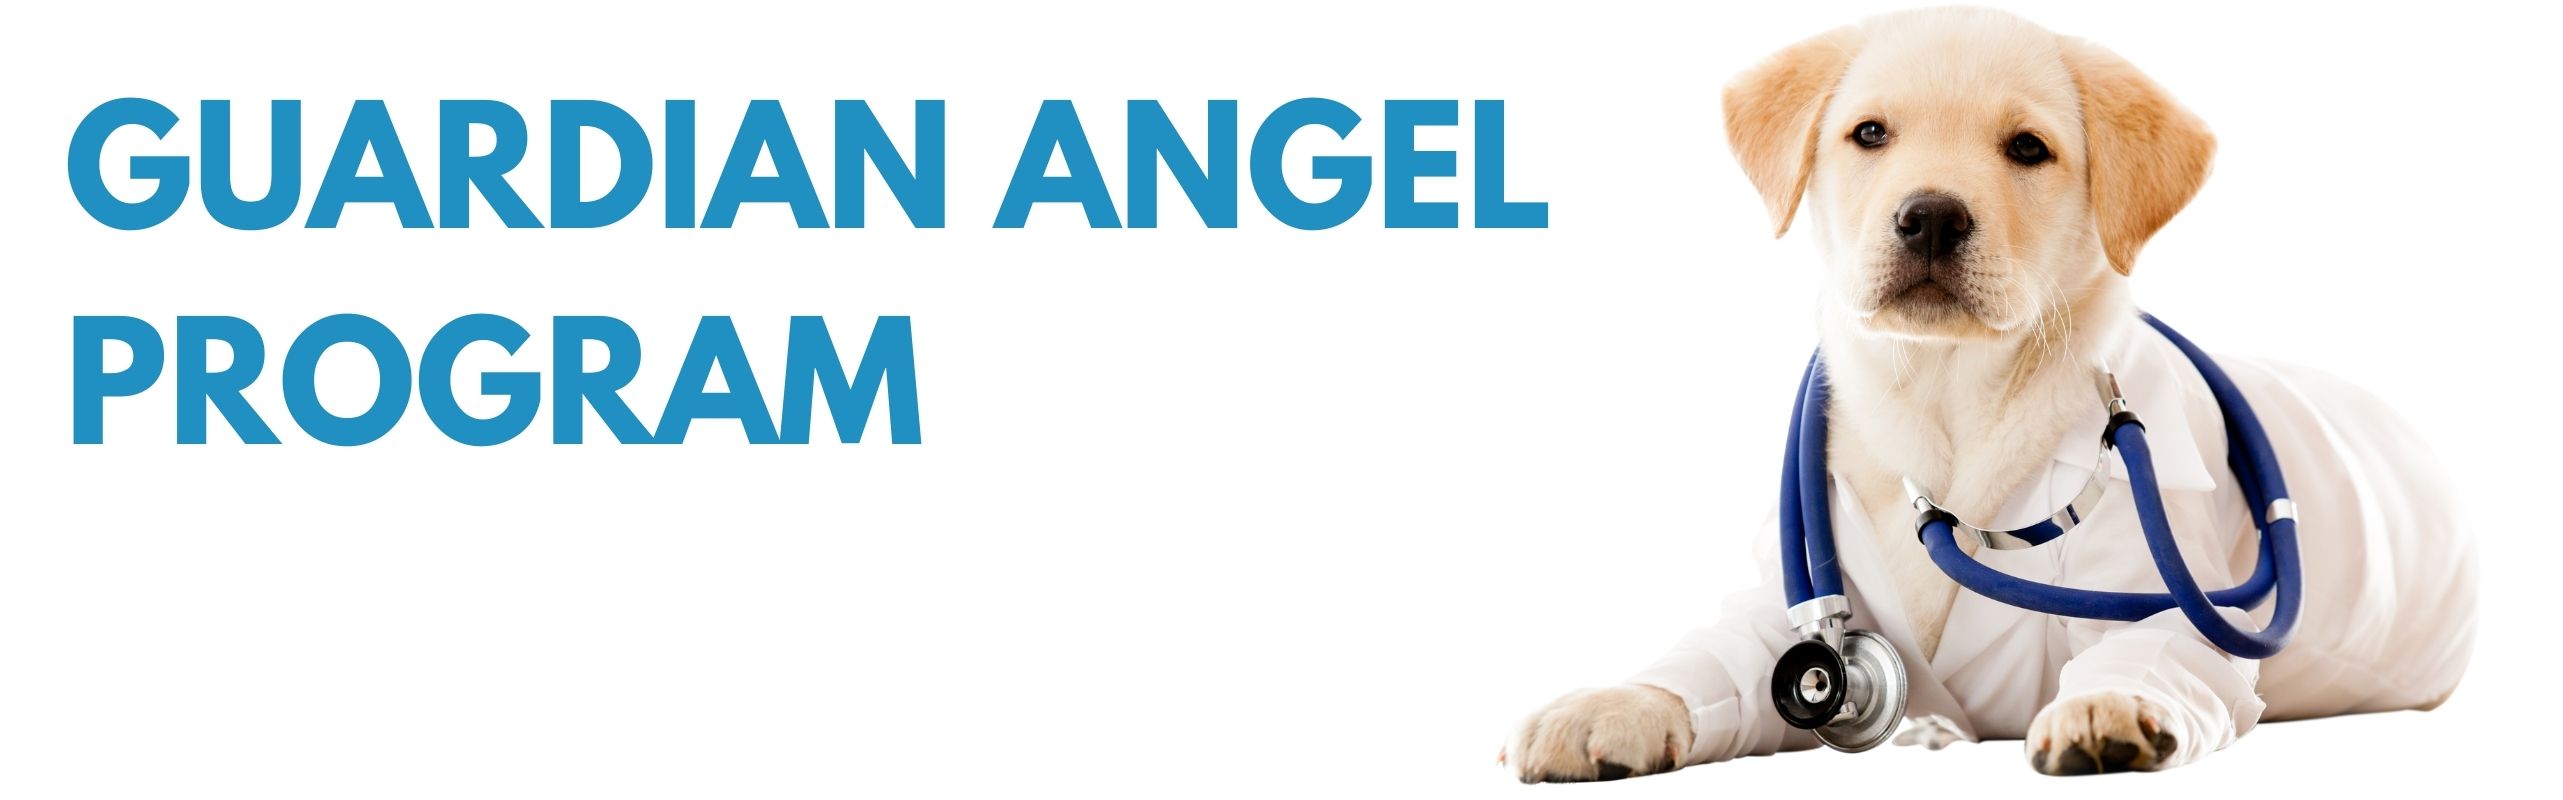 Guardian Angel Program - Placer SPCA